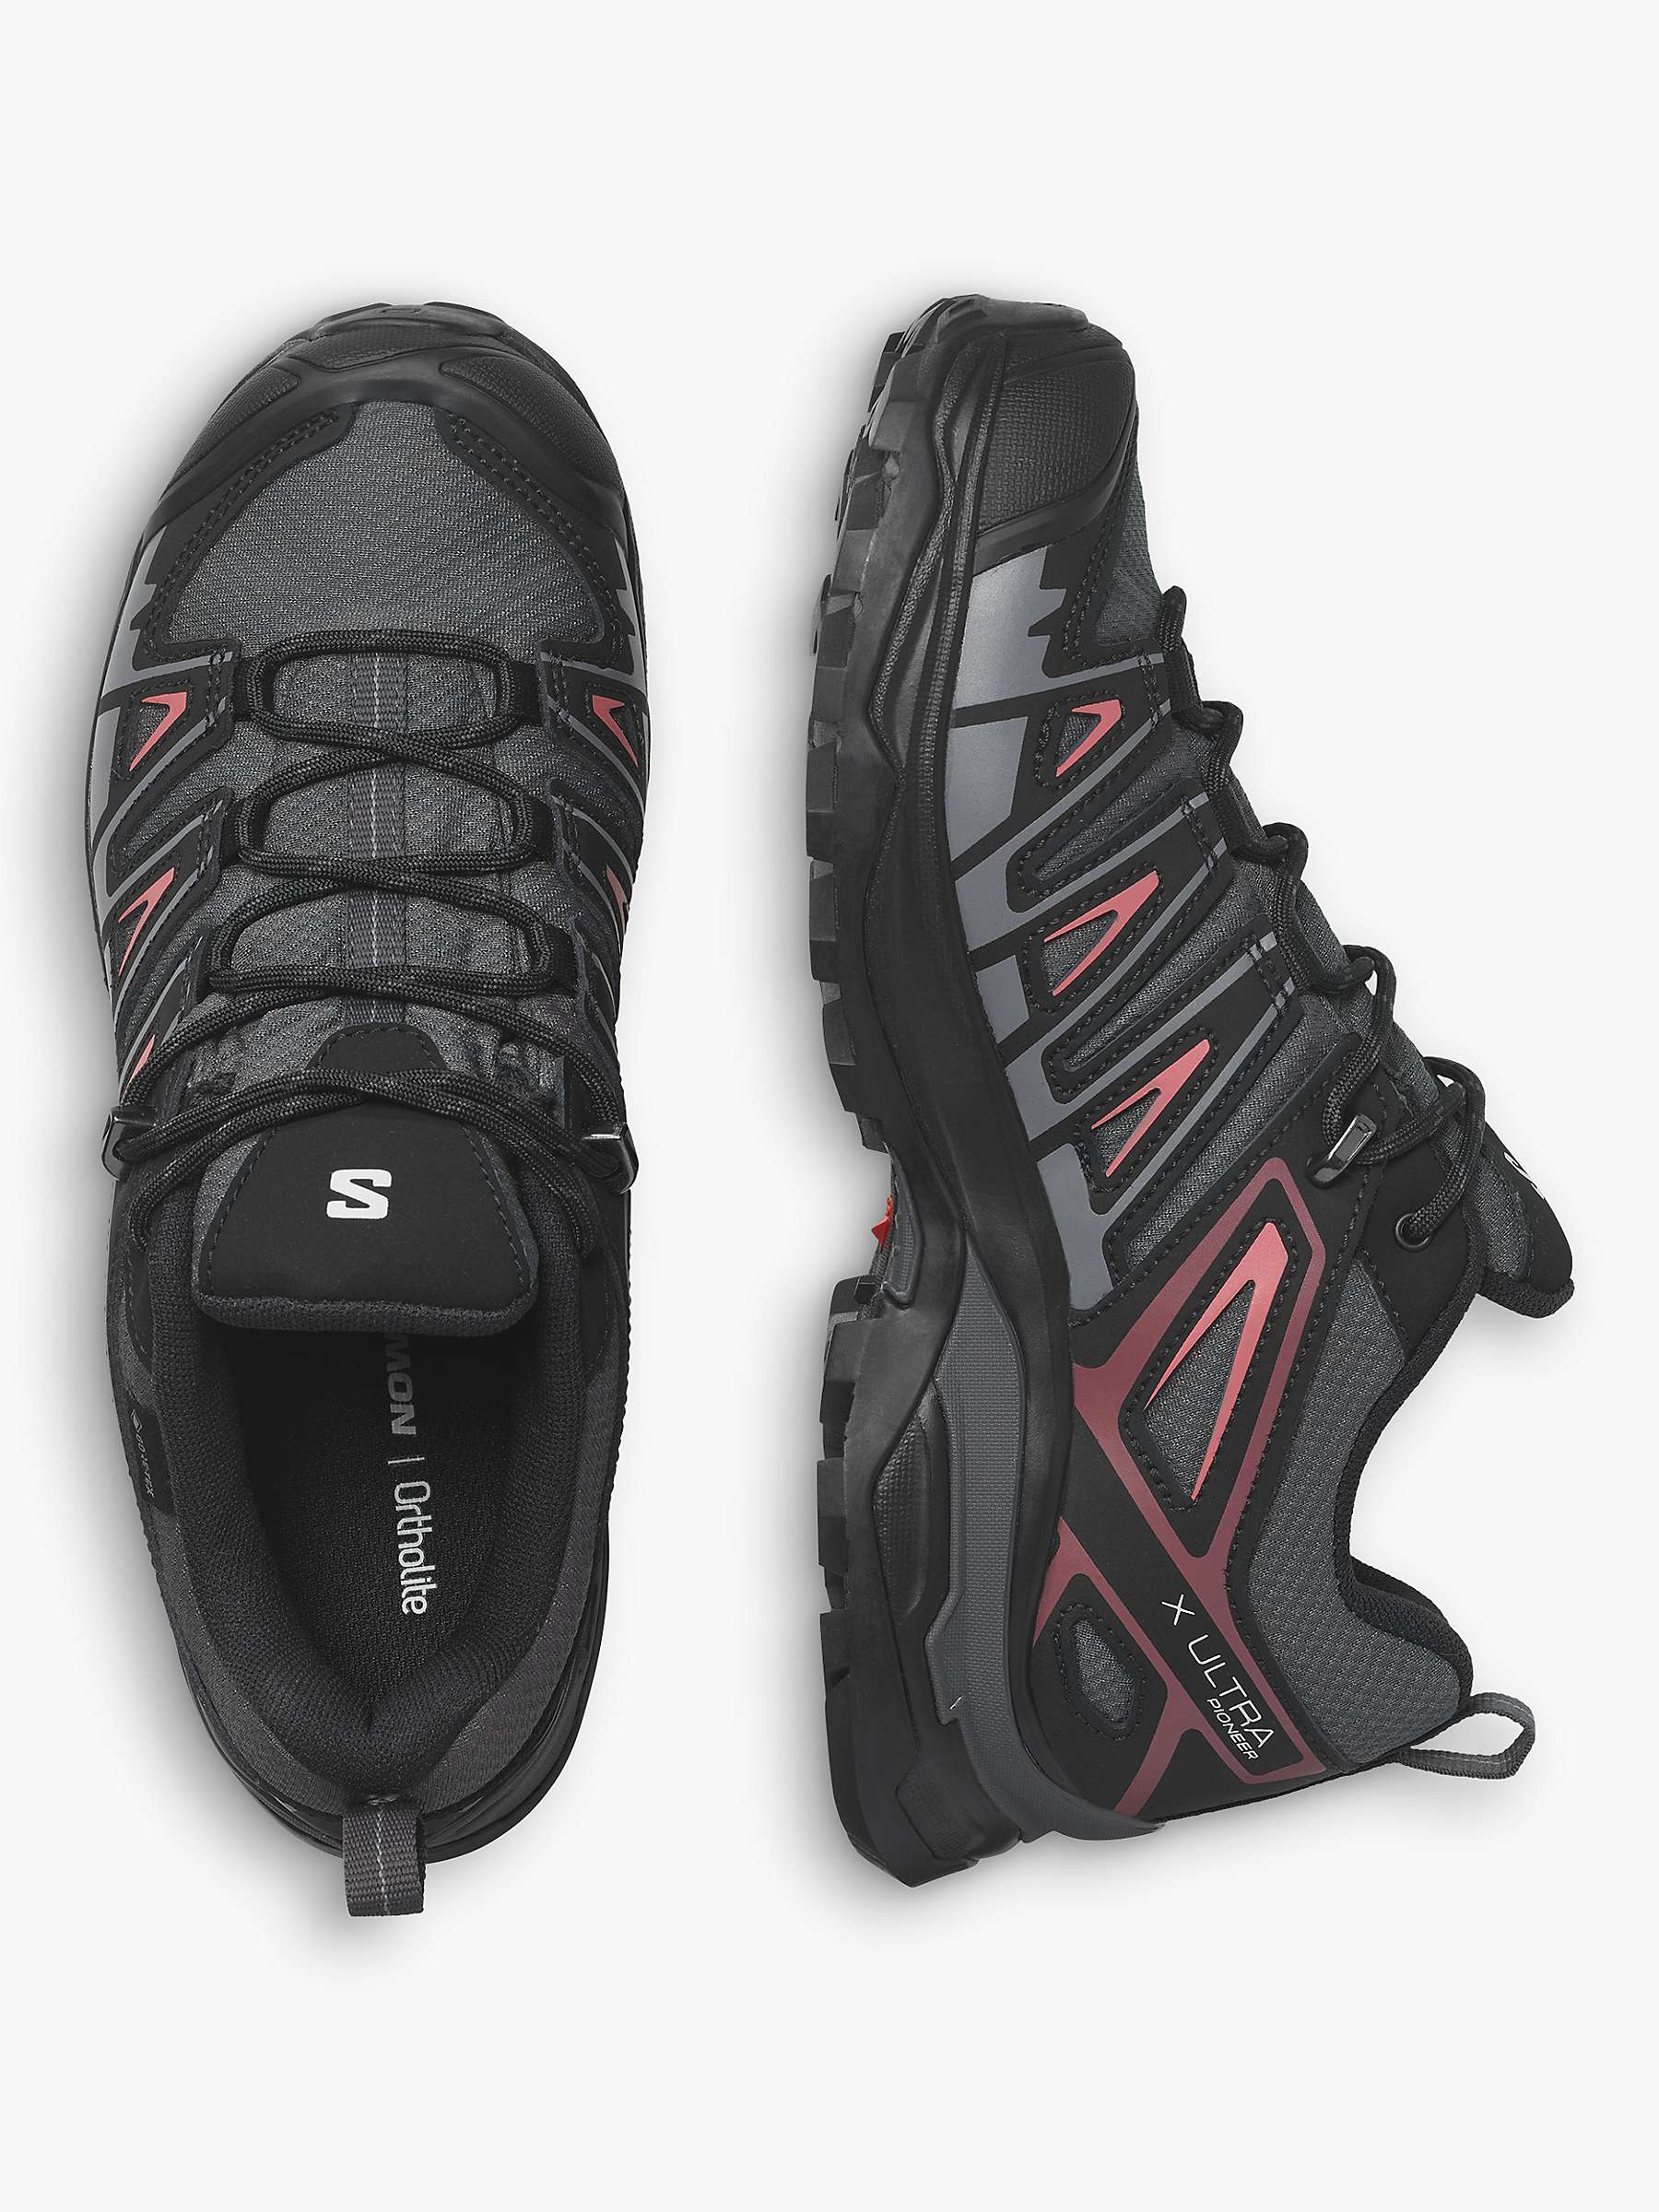 Buy Salomon X Ultra Pioneer Aero Women's Waterproof Hiking Shoes Online at johnlewis.com